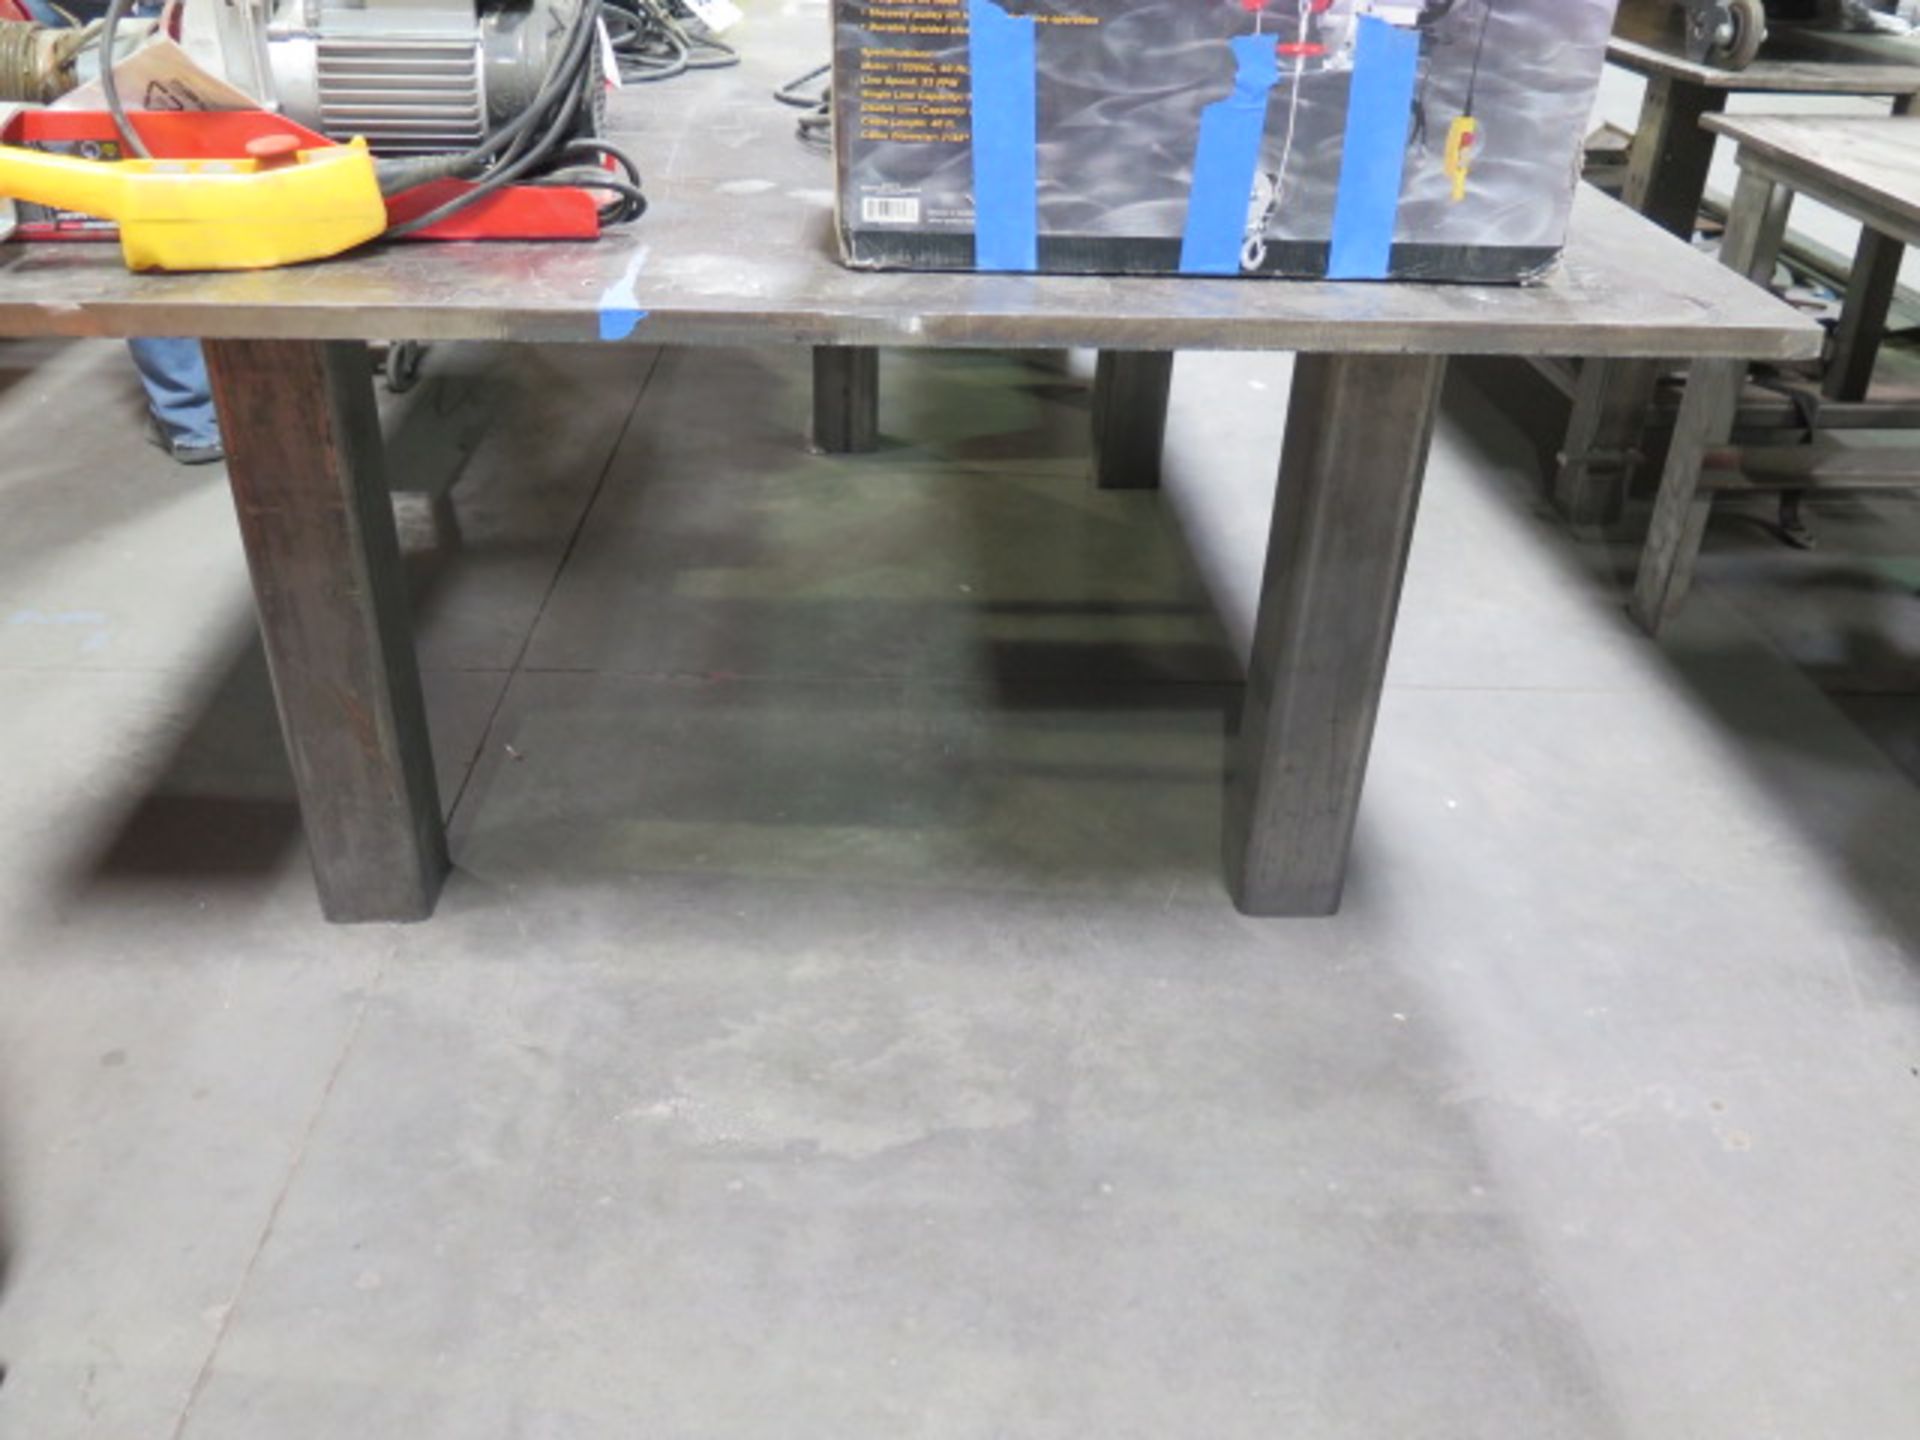 5’ x 12’ x 1” Steel Welding Table (SOLD AS-IS - NO WARRANTY) - Image 3 of 6